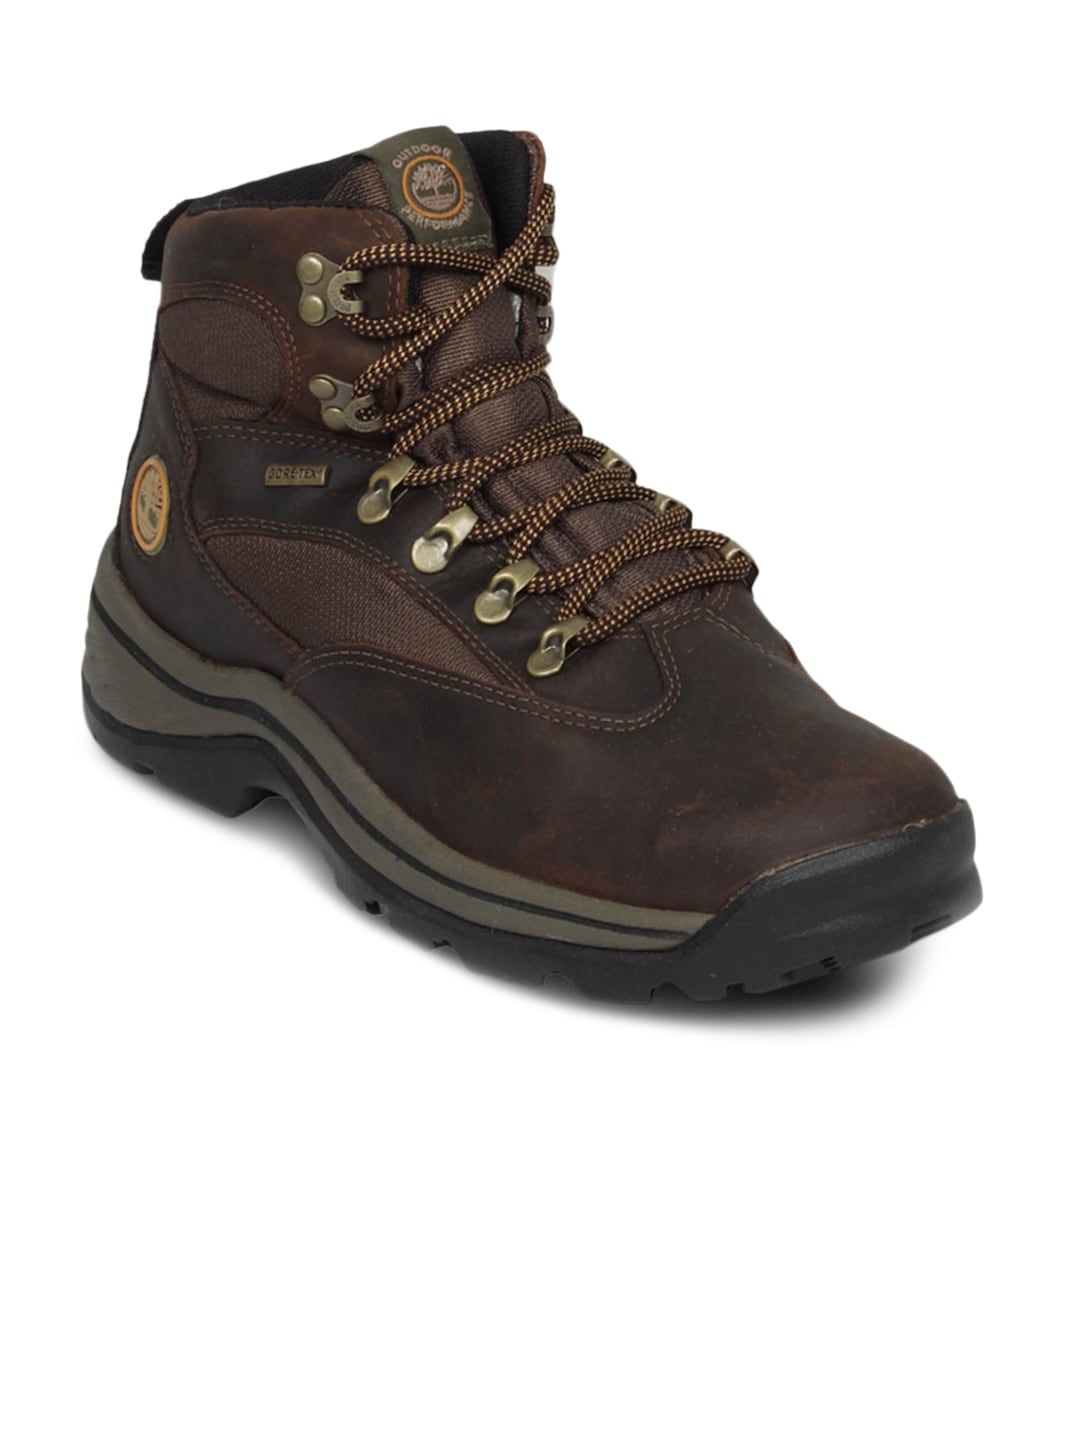 Timberland Men's Chocorua Trail Brown Shoe